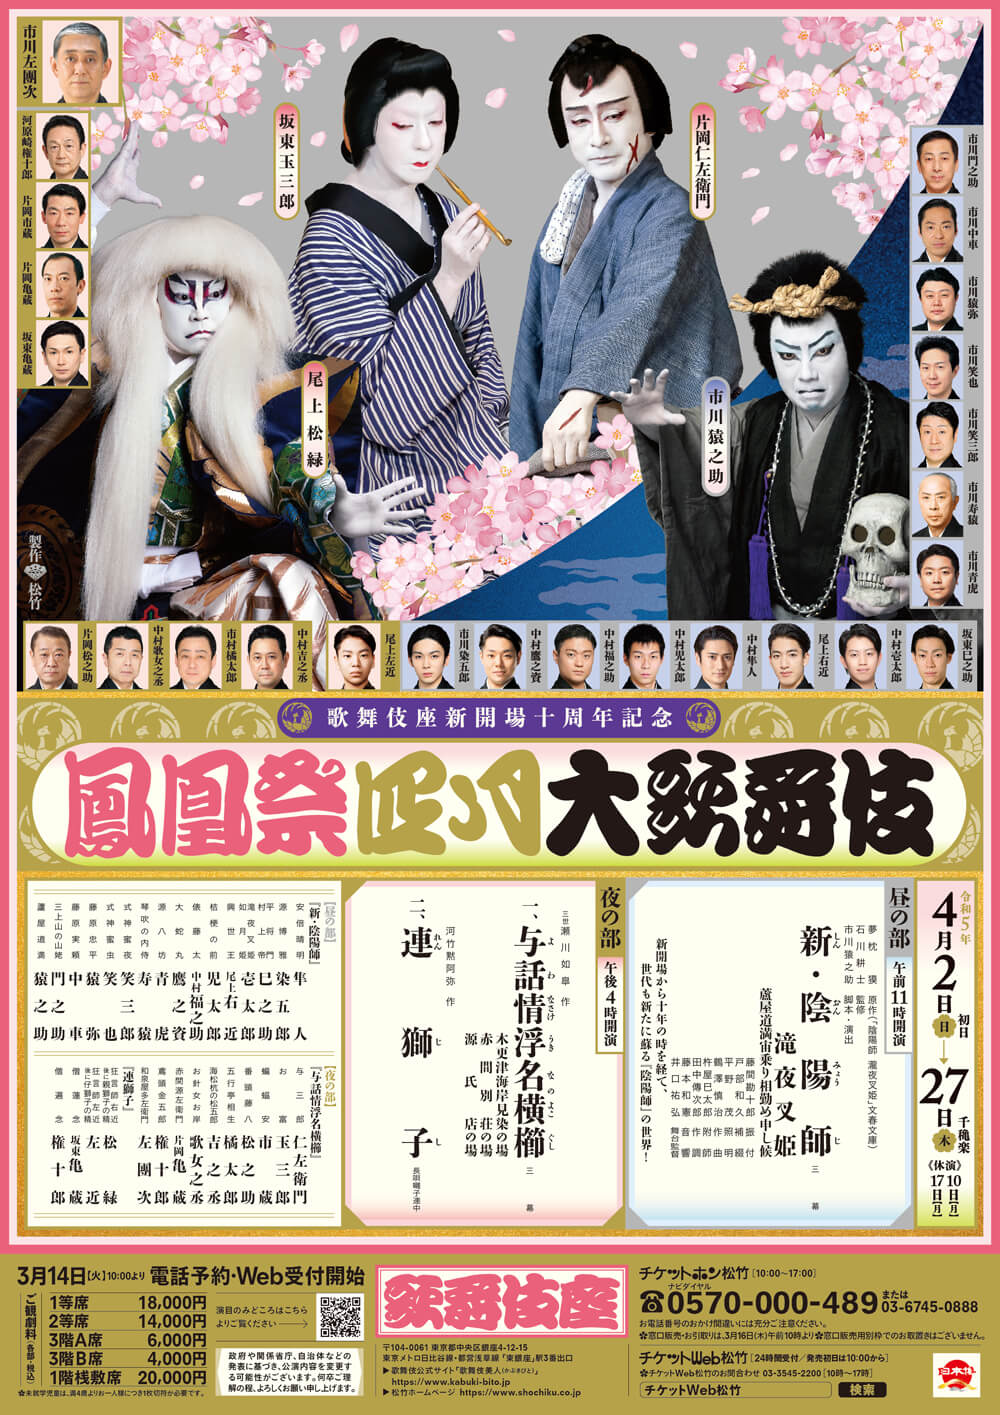 April Program at the kabukiza